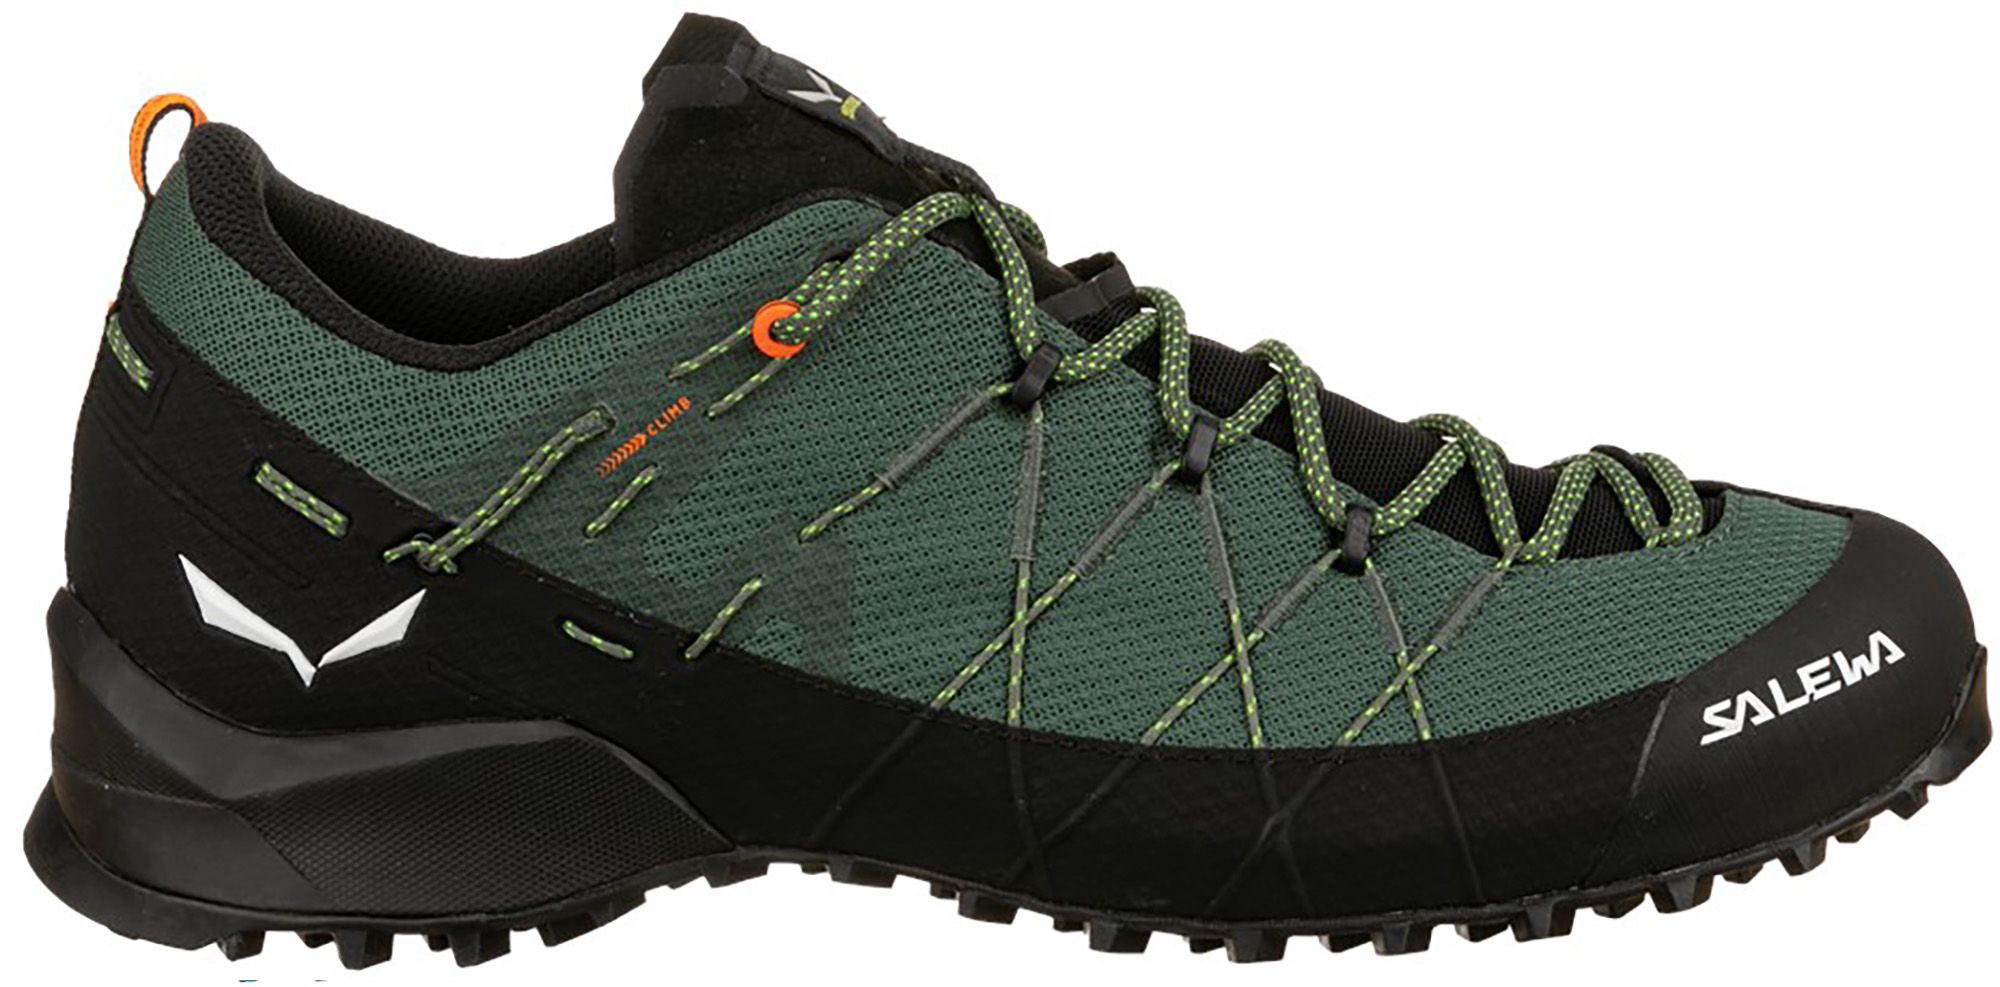 Photos - Trekking Shoes Salewa Men's Wildfire 2 Approach Shoes, Size 9, Black/Green 22IYPMMWLDFR2B 